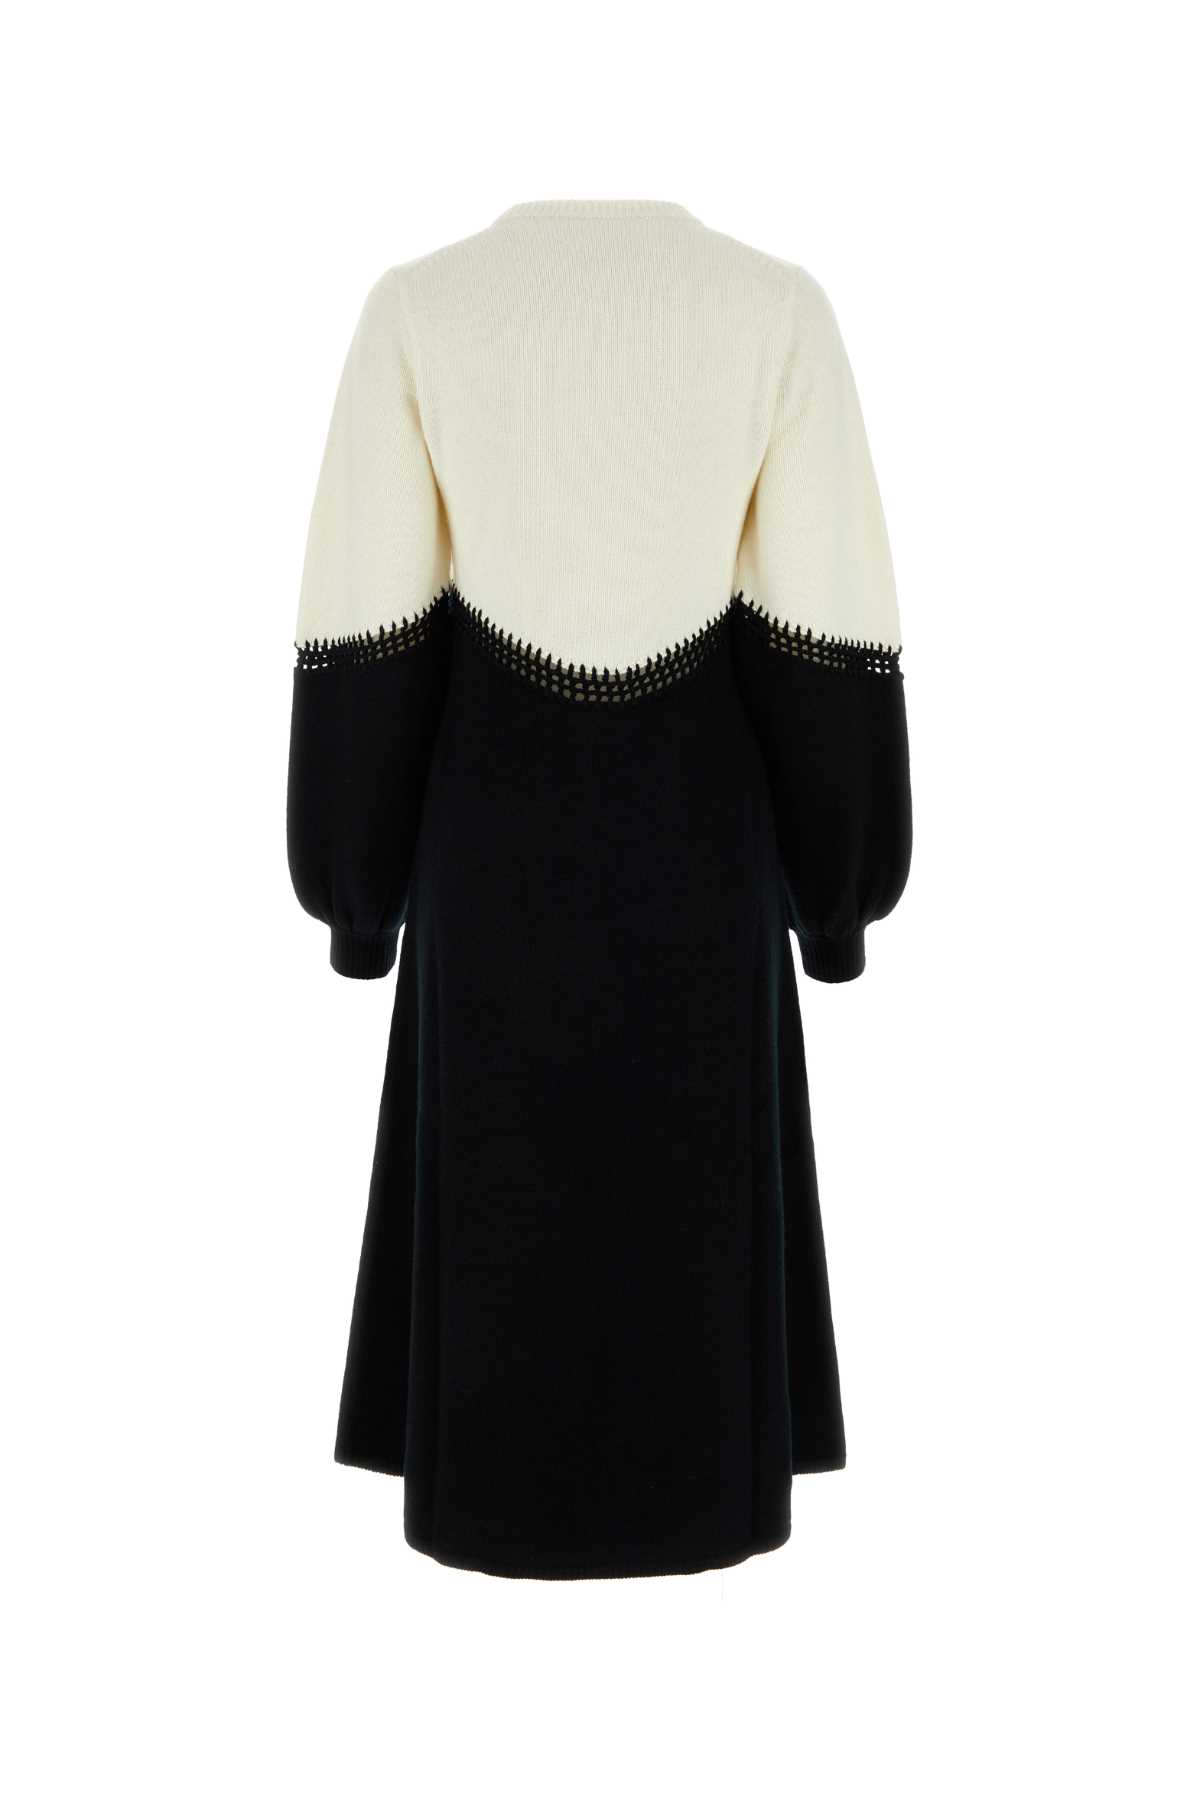 Chloé Two-tone Wool Blend Jumper Dress In Blackwhite1